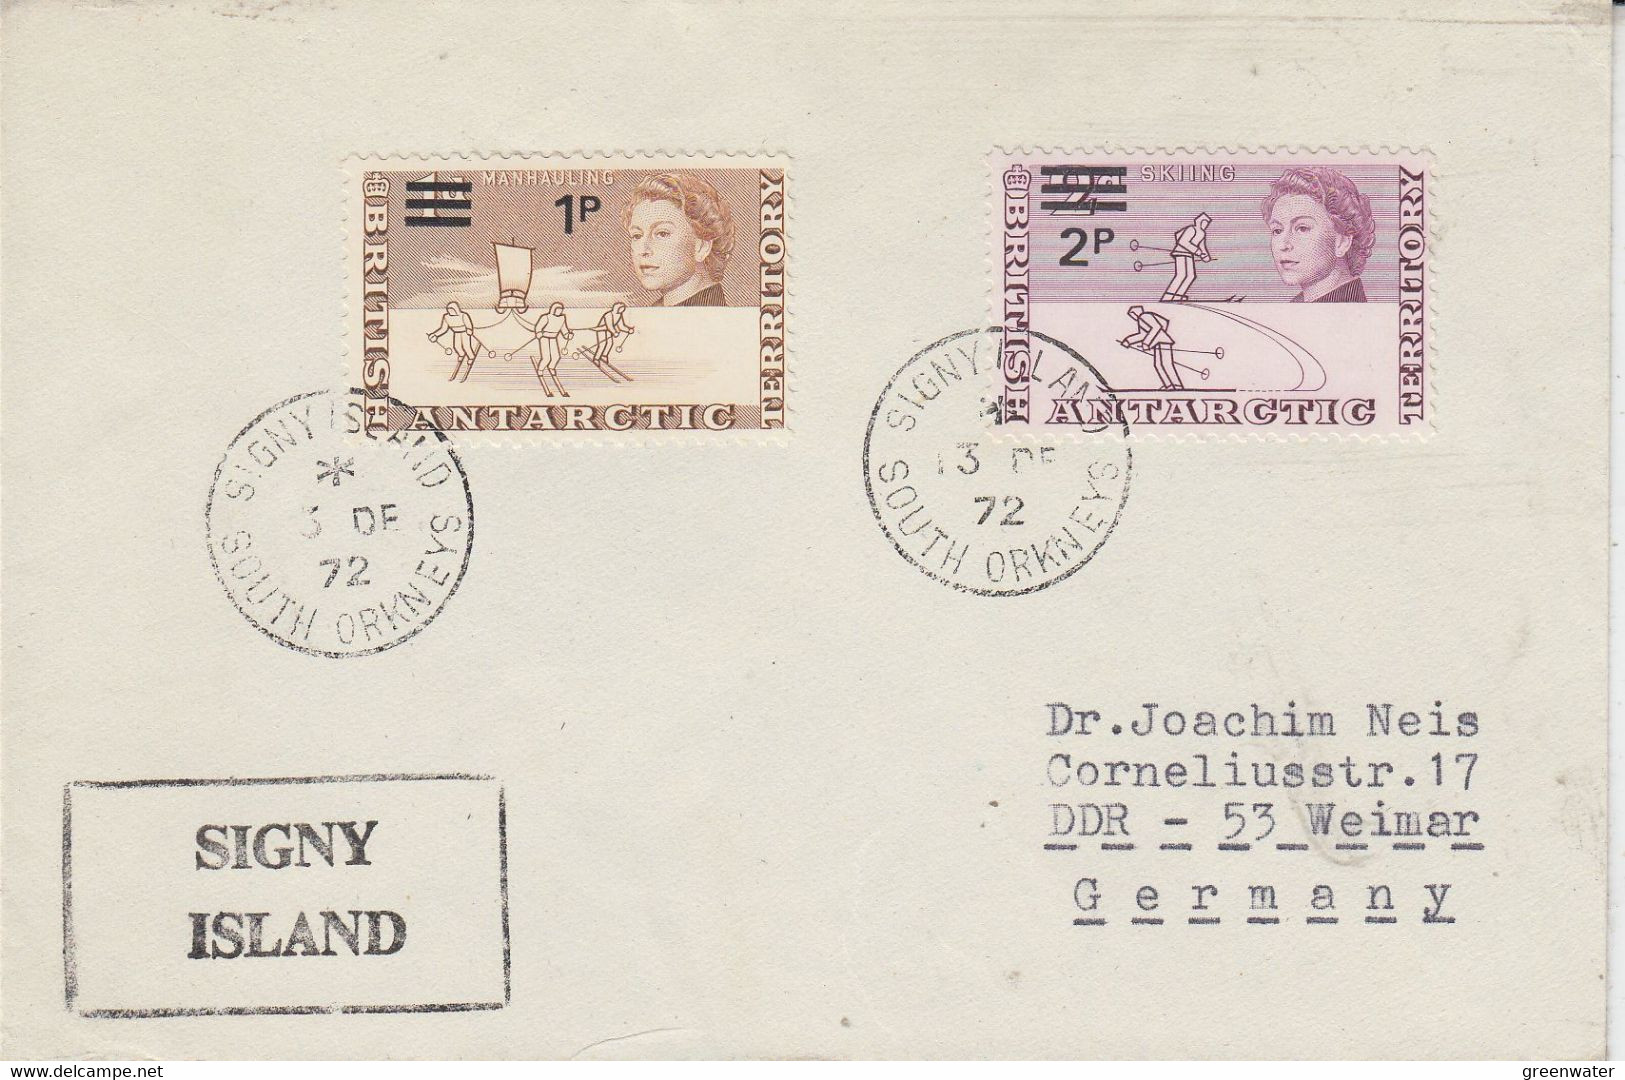 British Antarctic Territories (BAT) Cover Ca Signy Island South Orkneys 13 DE 1972 (TA160) - Covers & Documents